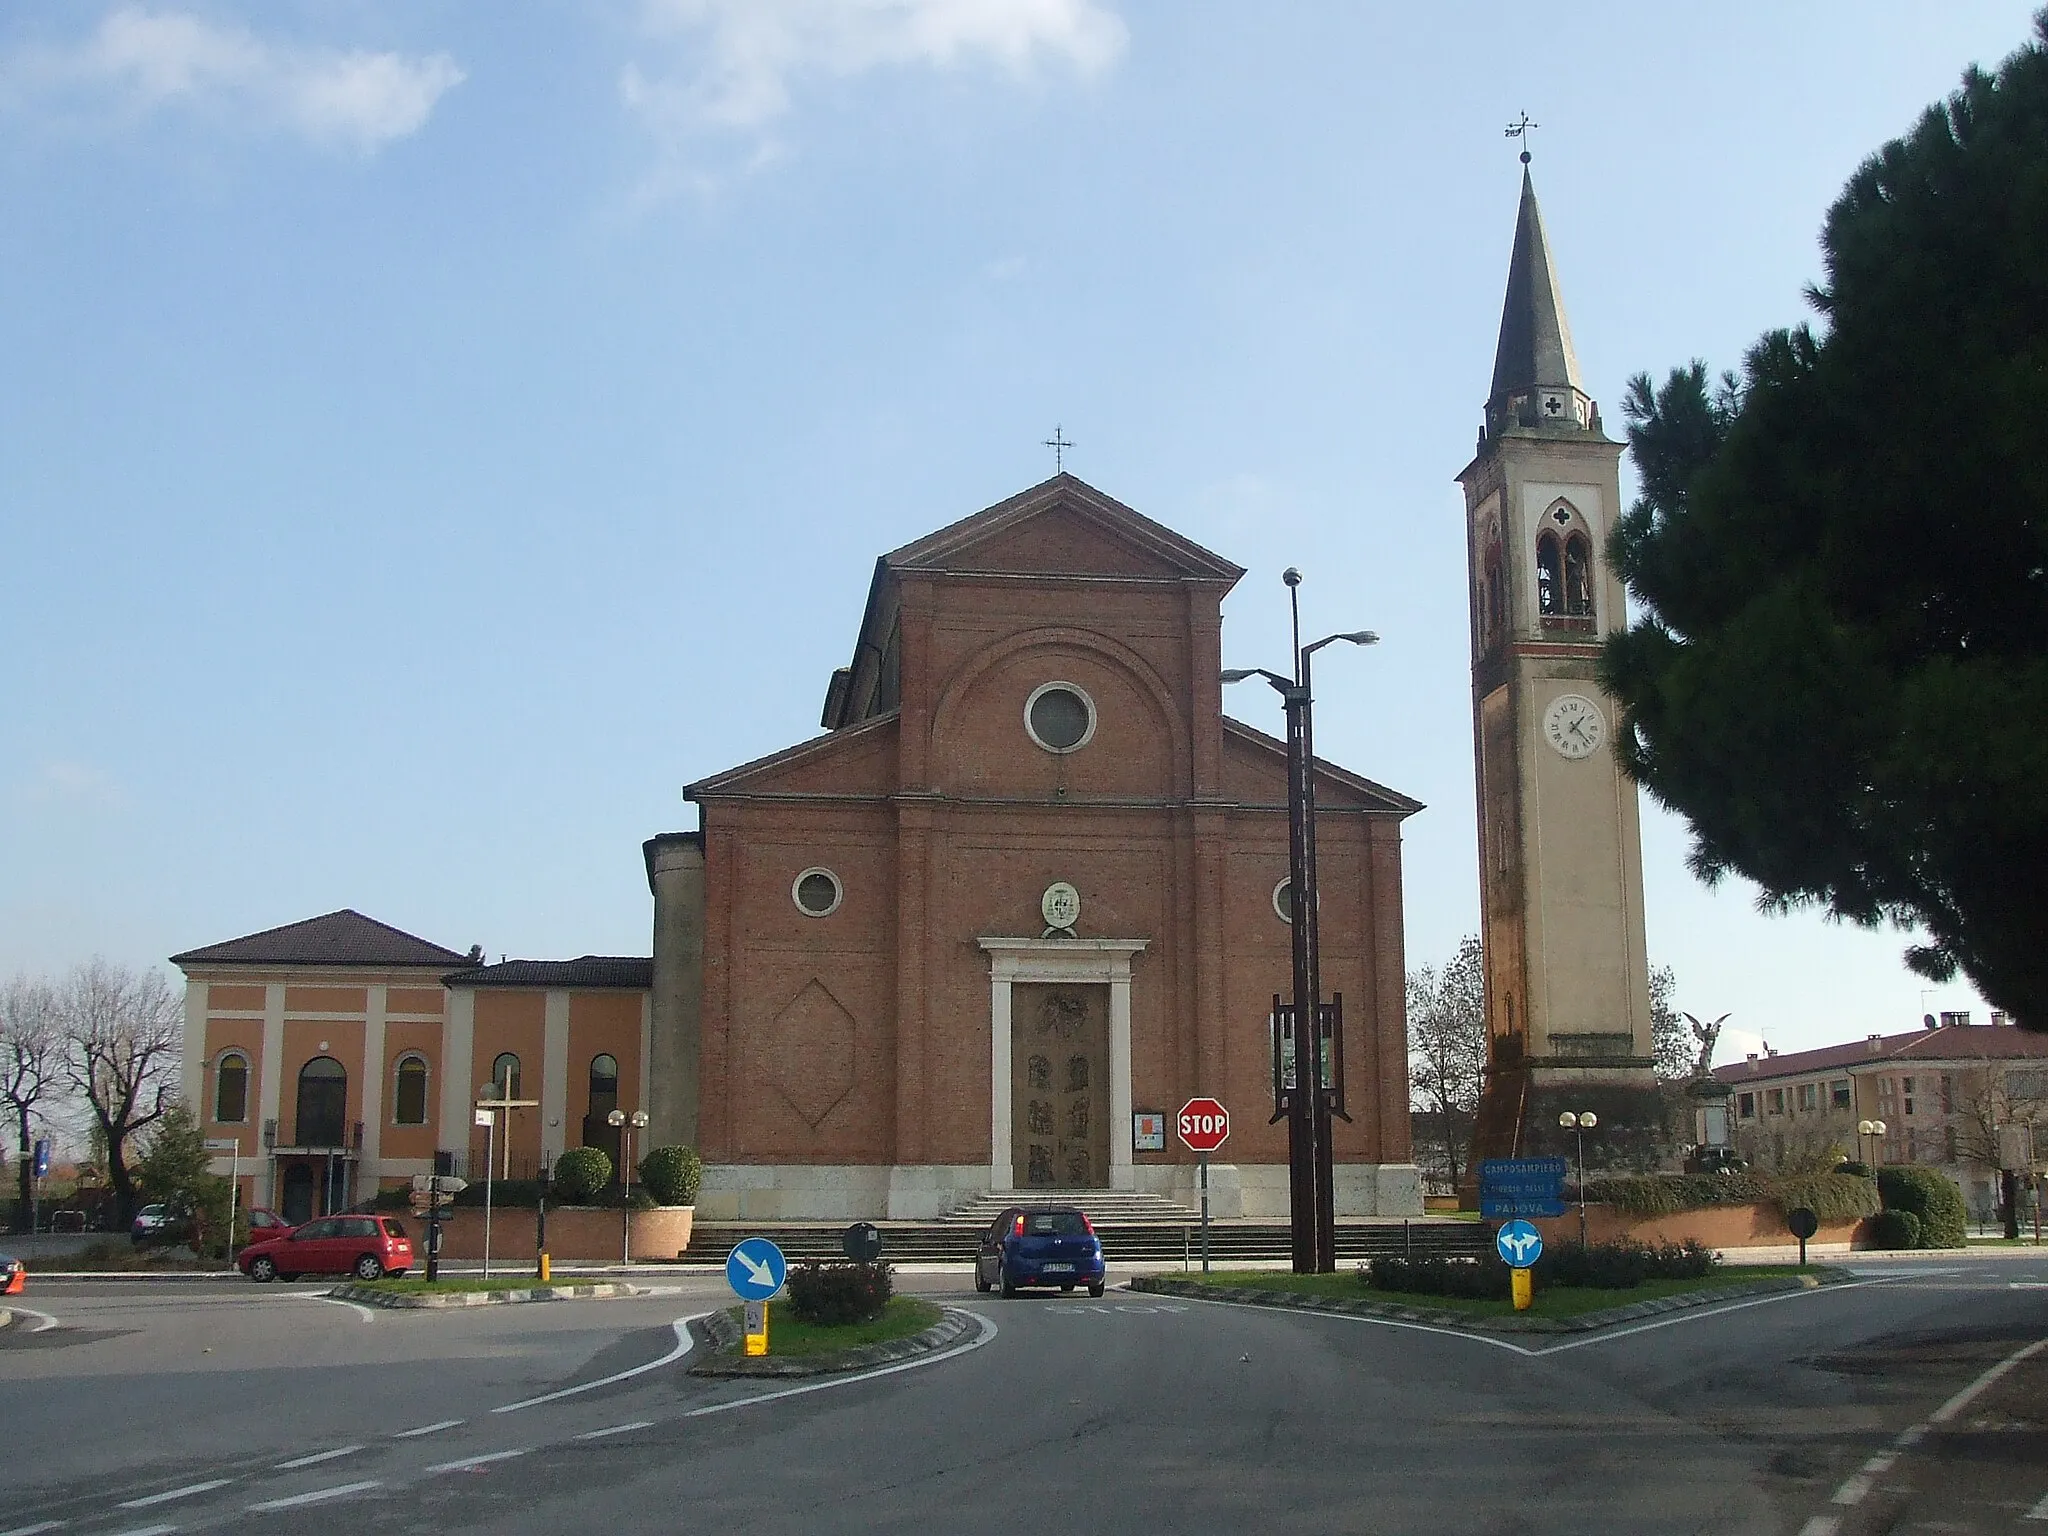 Image de Santa Giustina in Colle